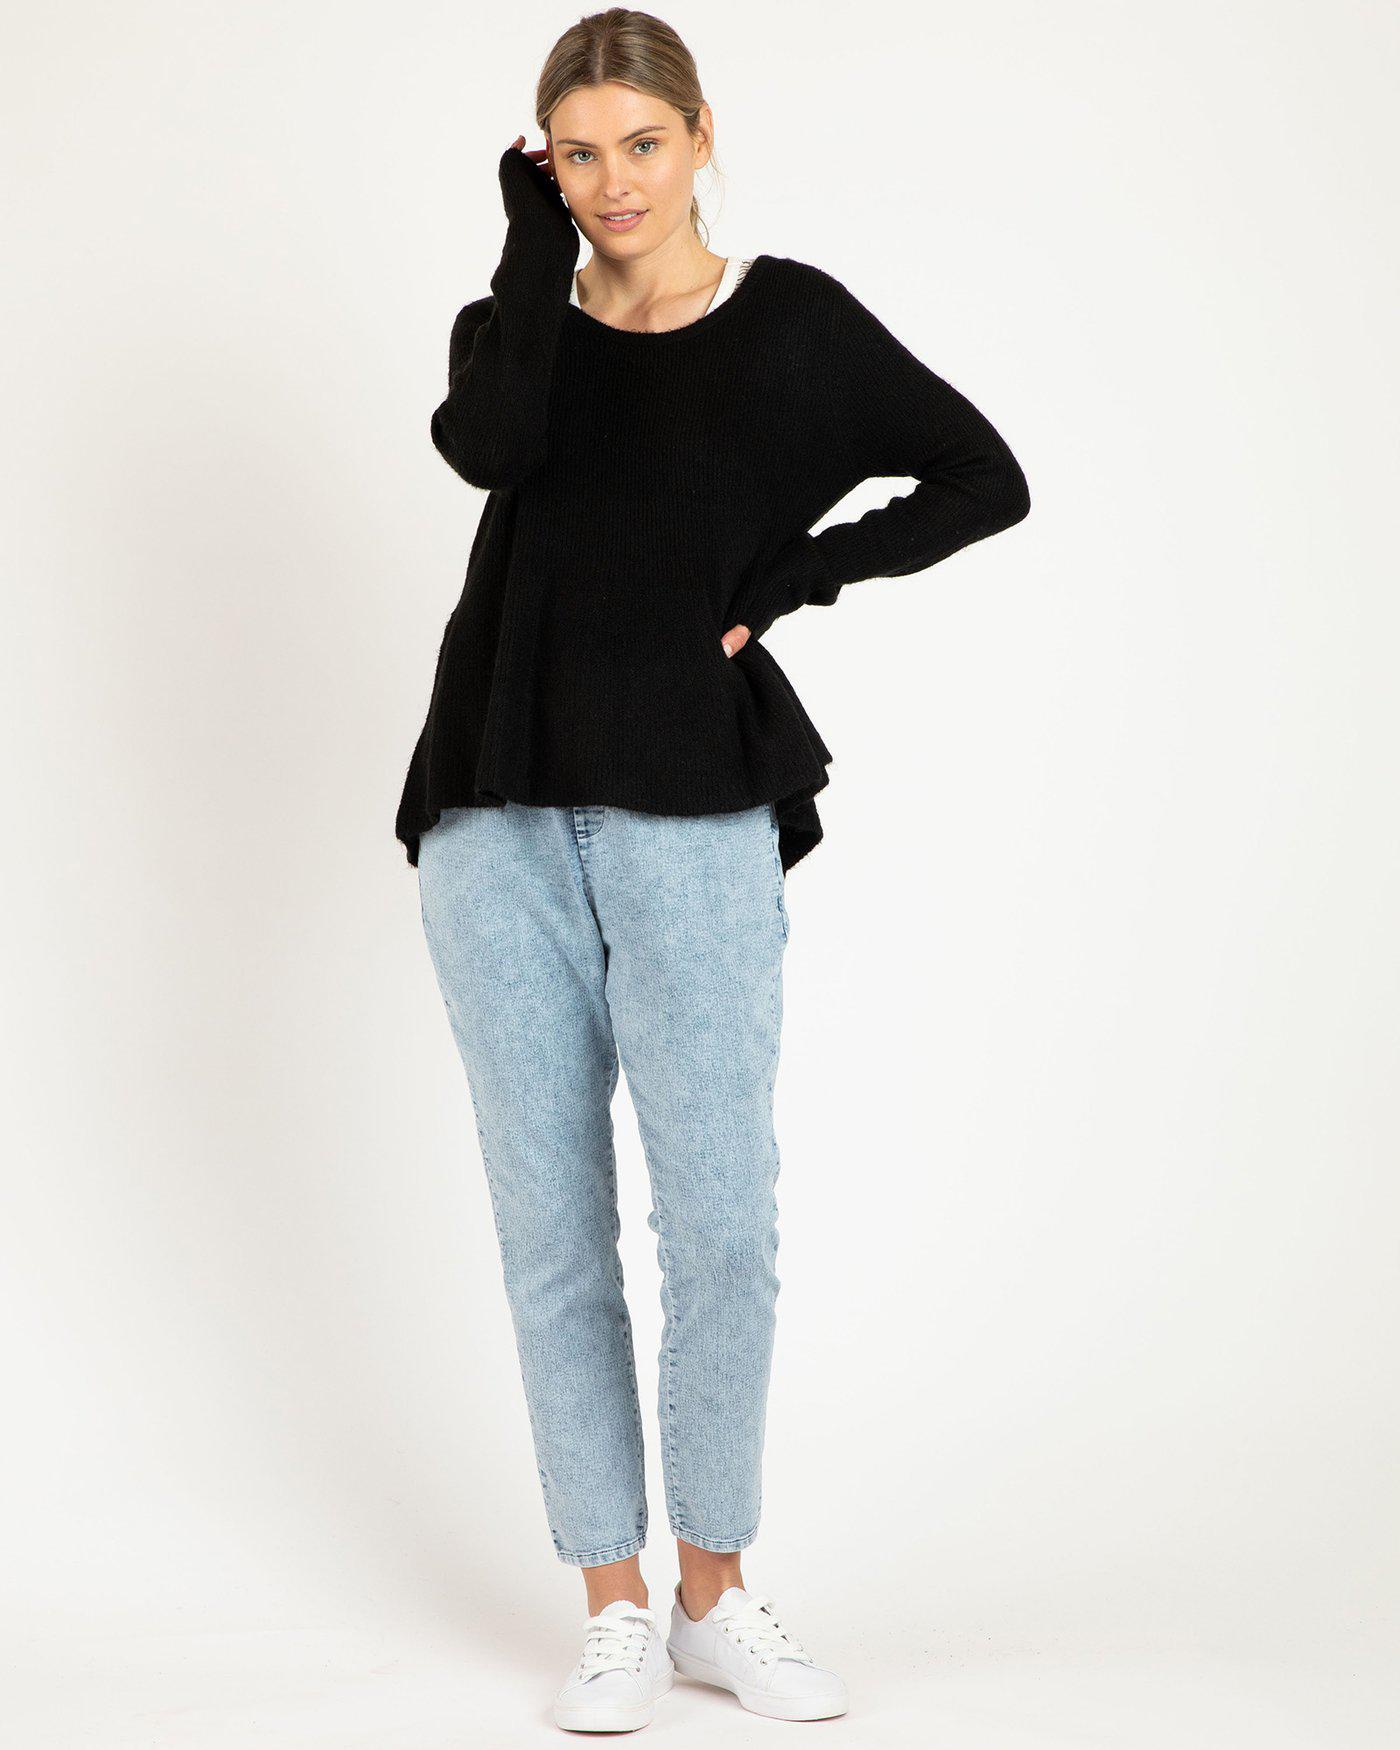 Lexi Knit Jumper - Black - Betty Basics - FUDGE Gifts Home Lifestyle